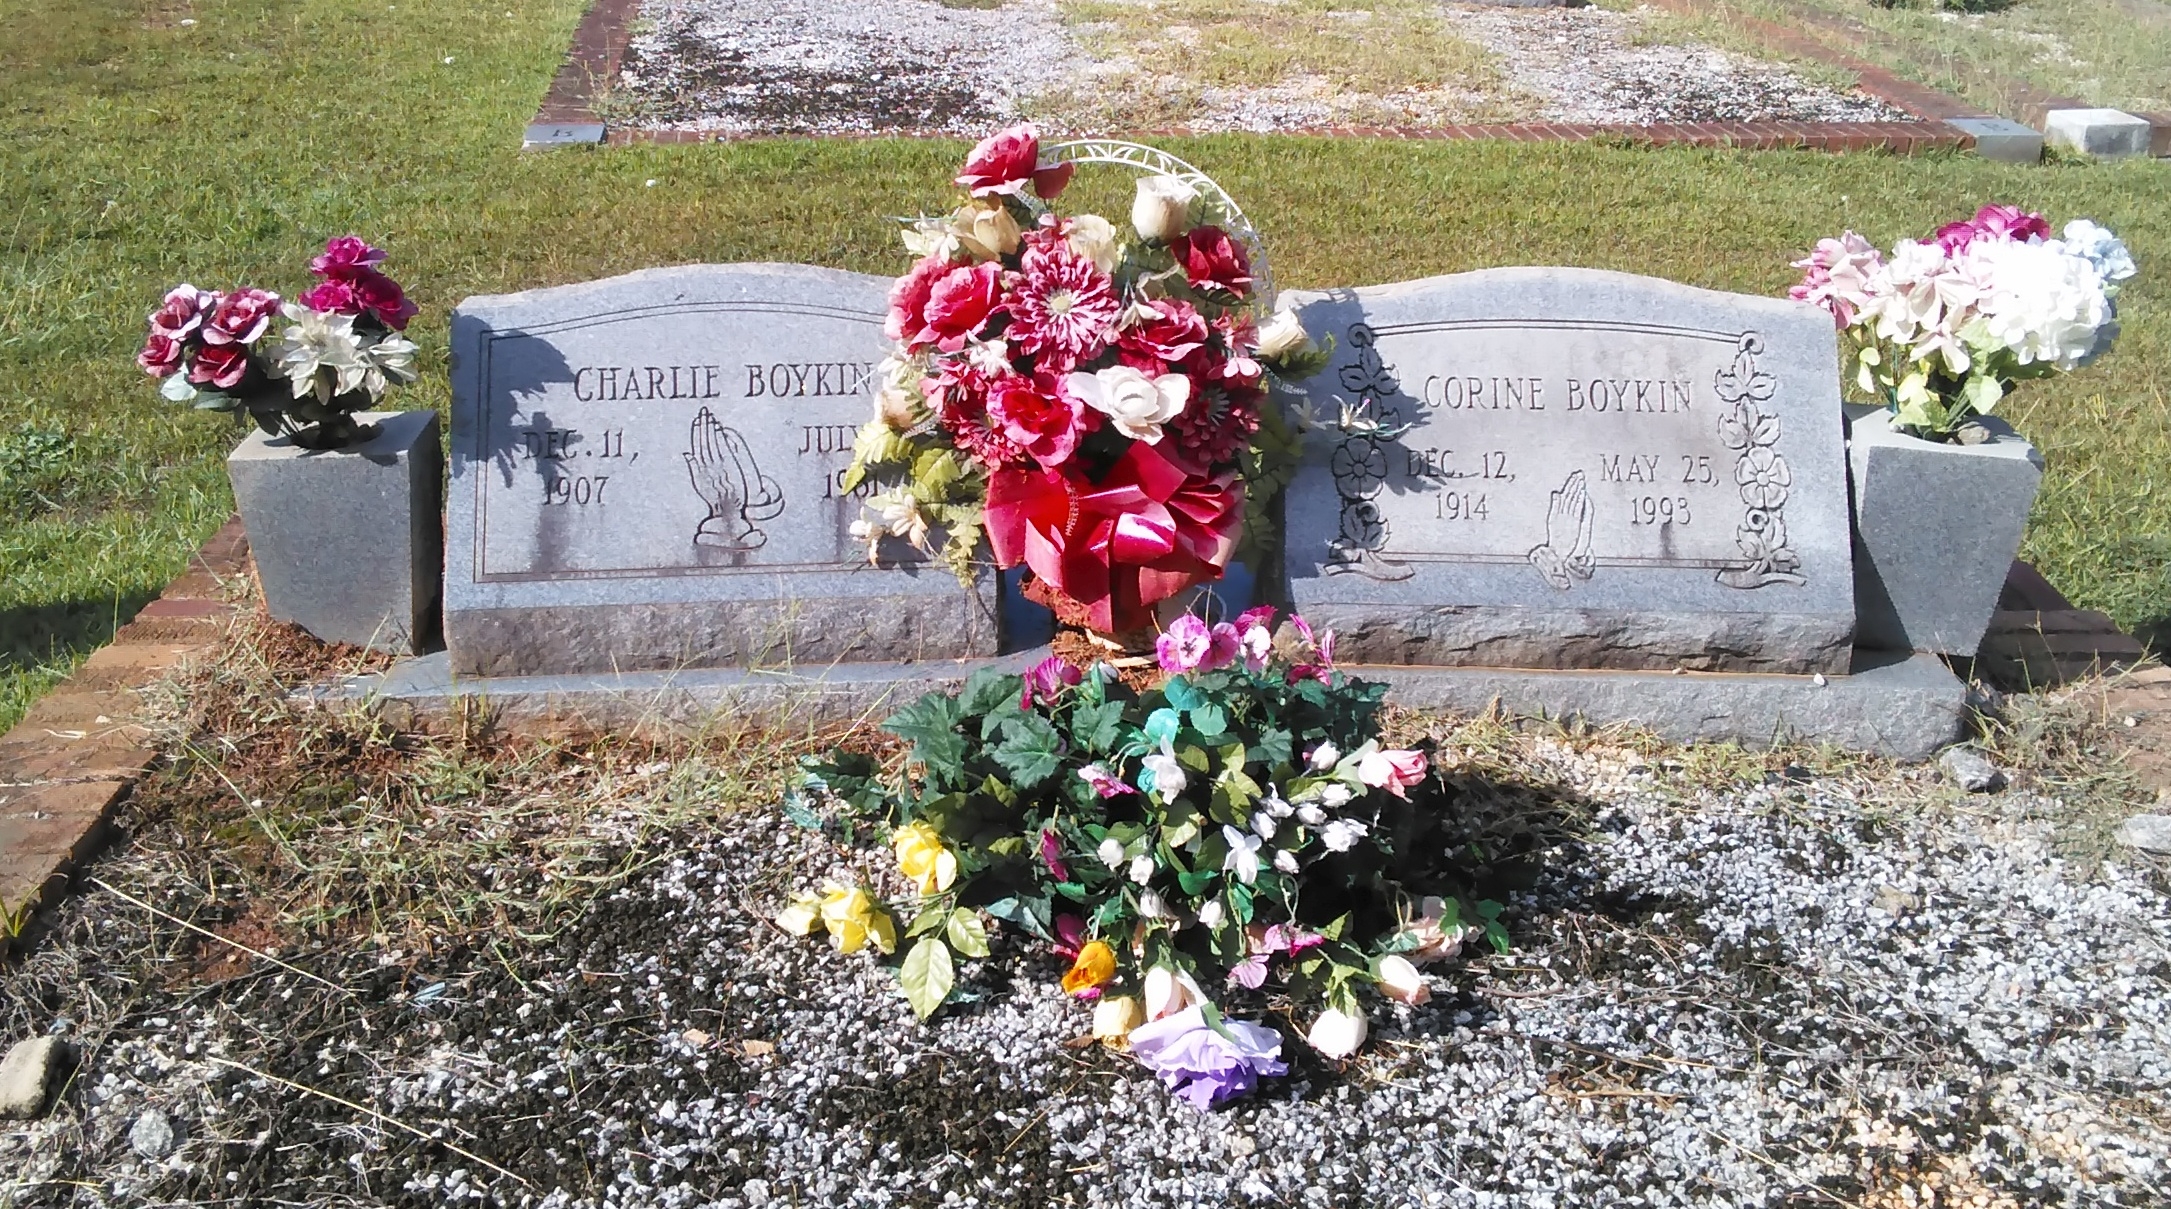 Corine and Charlie Boykin gravesite